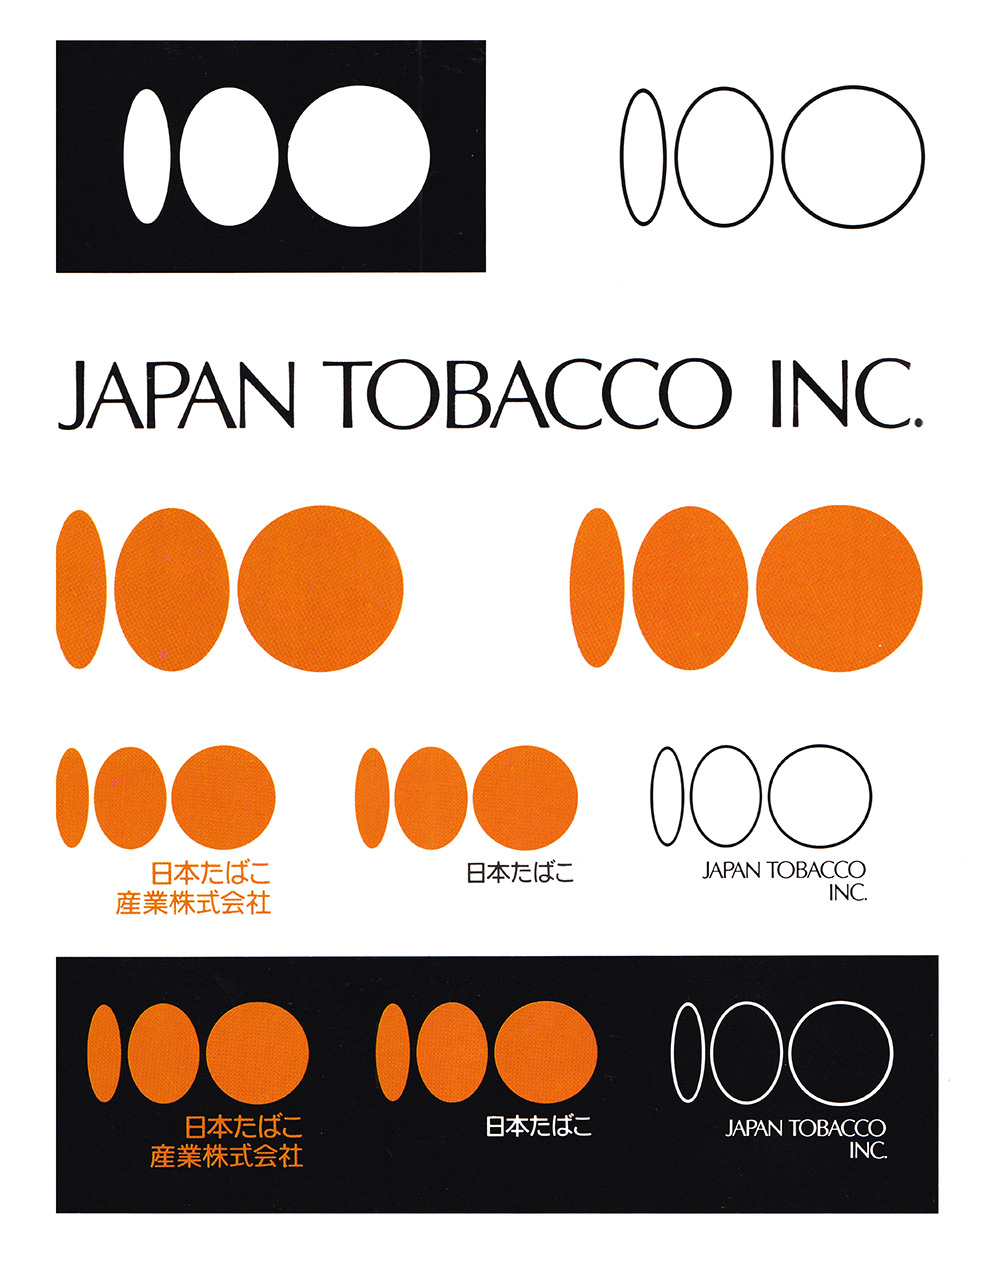 Japan Tobacco Inc. by Ray Yoshimura, Akira Ishikawa & Dentsu, 1985, Japan